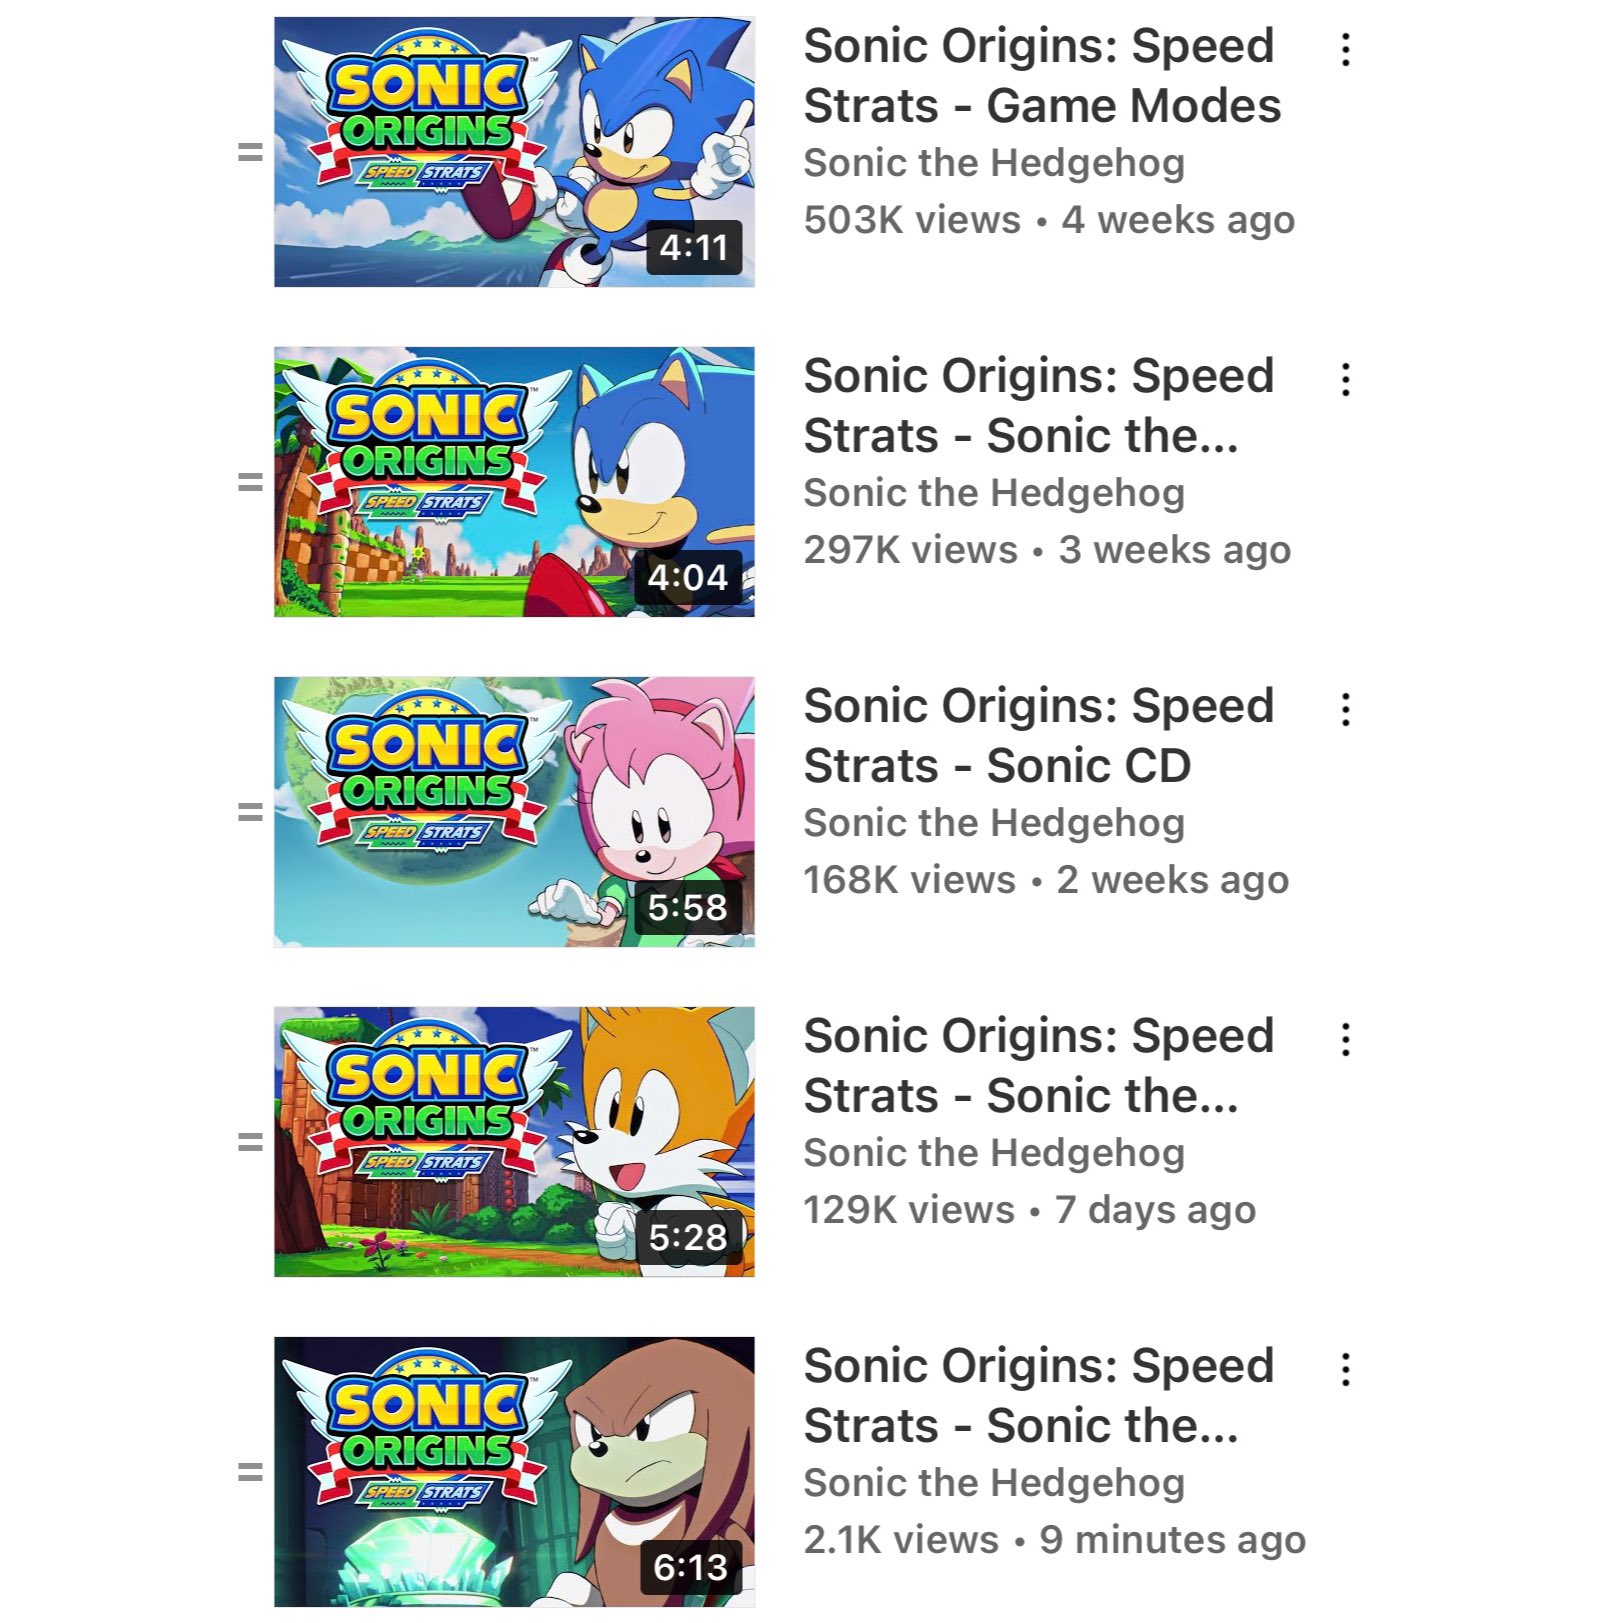 Sonic Origins: Speed Strats - Sonic the Hedgehog 